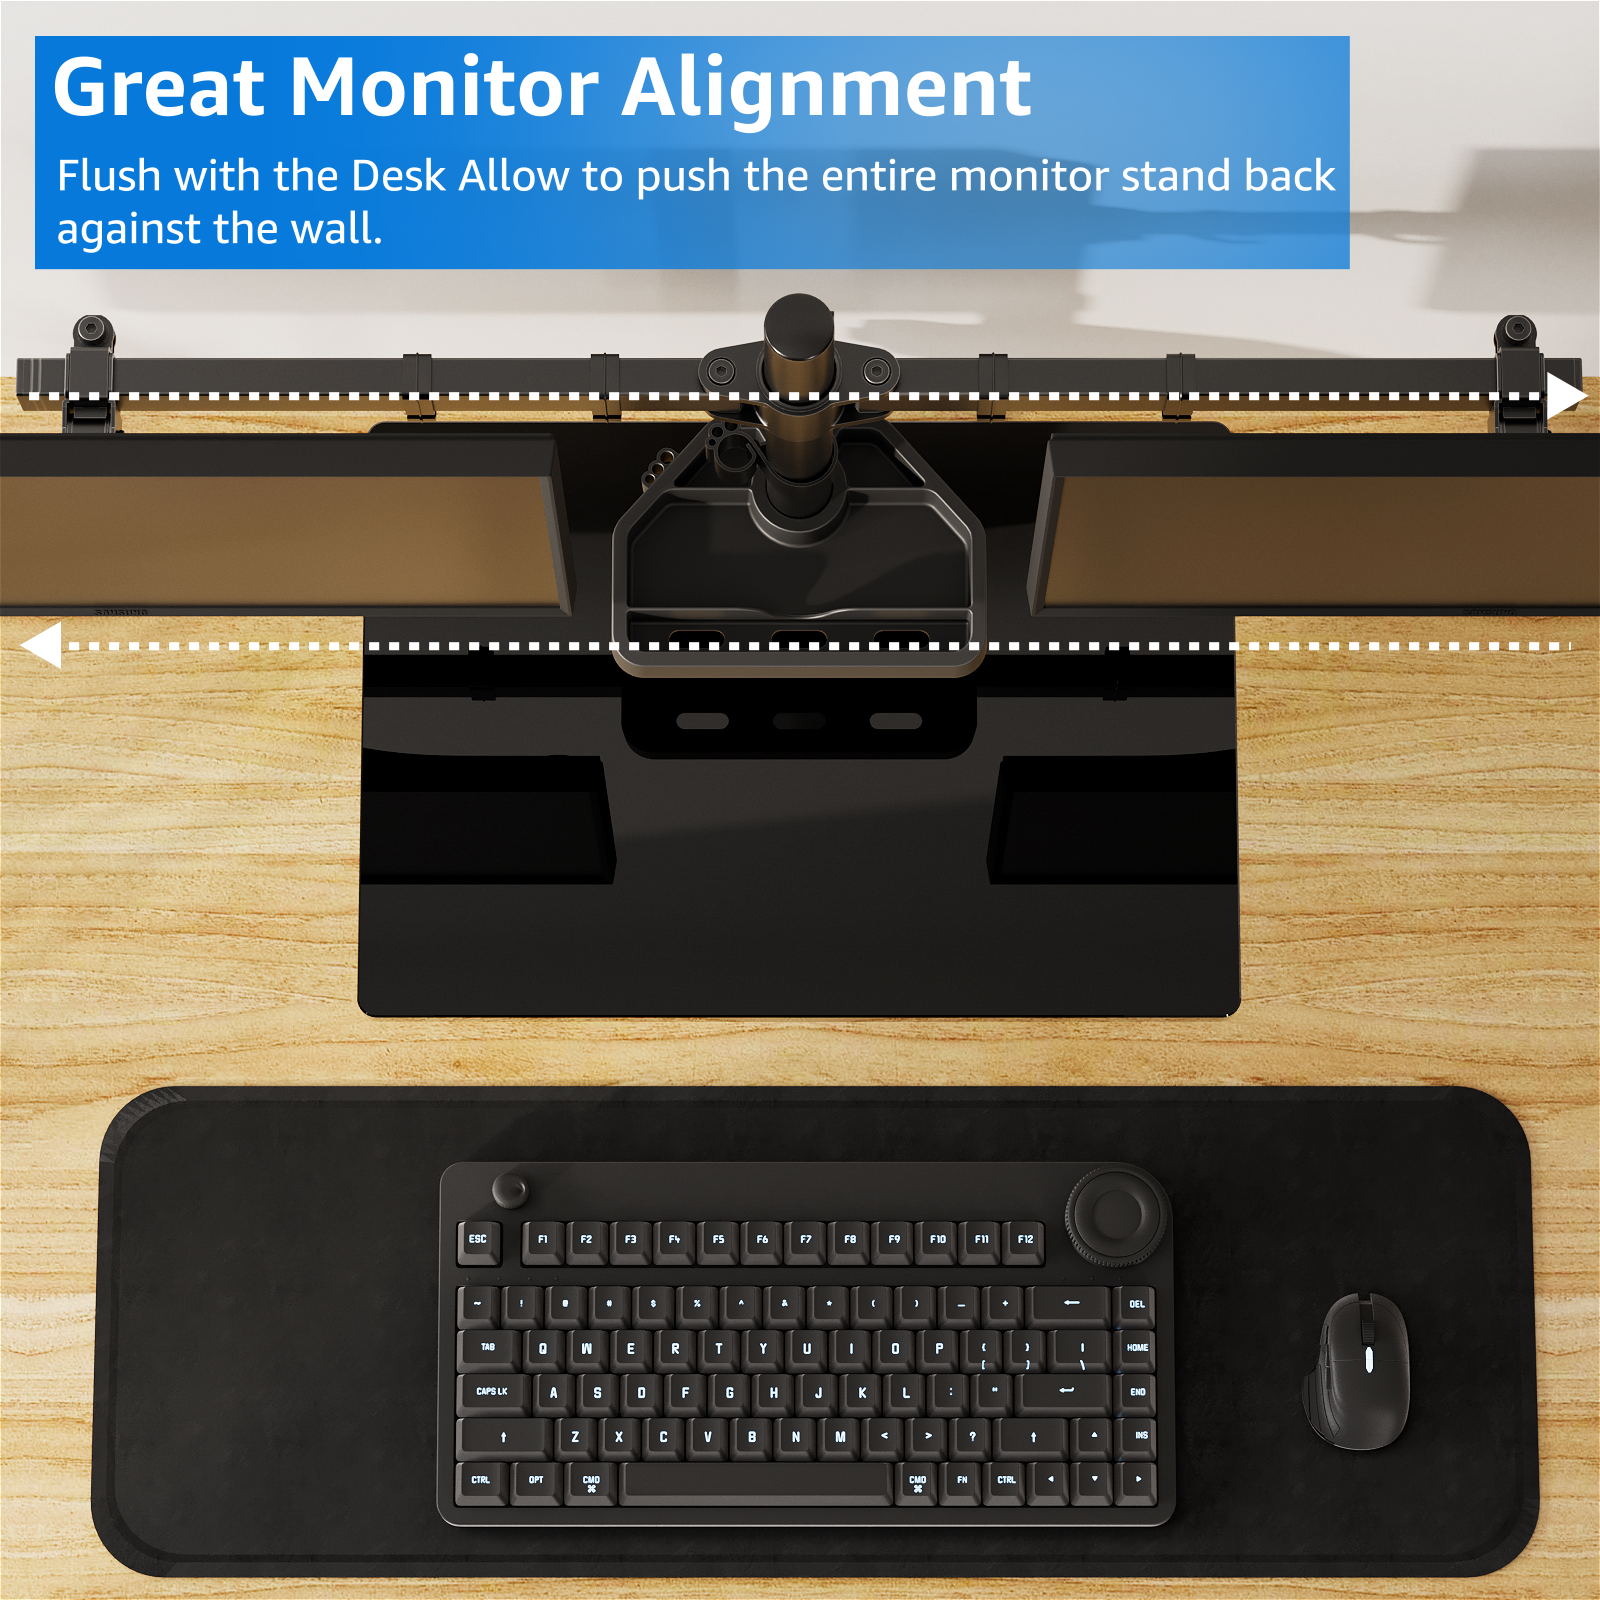 Dual Monitor Desk Stand for 13''-27’’ Monitors MUA1014